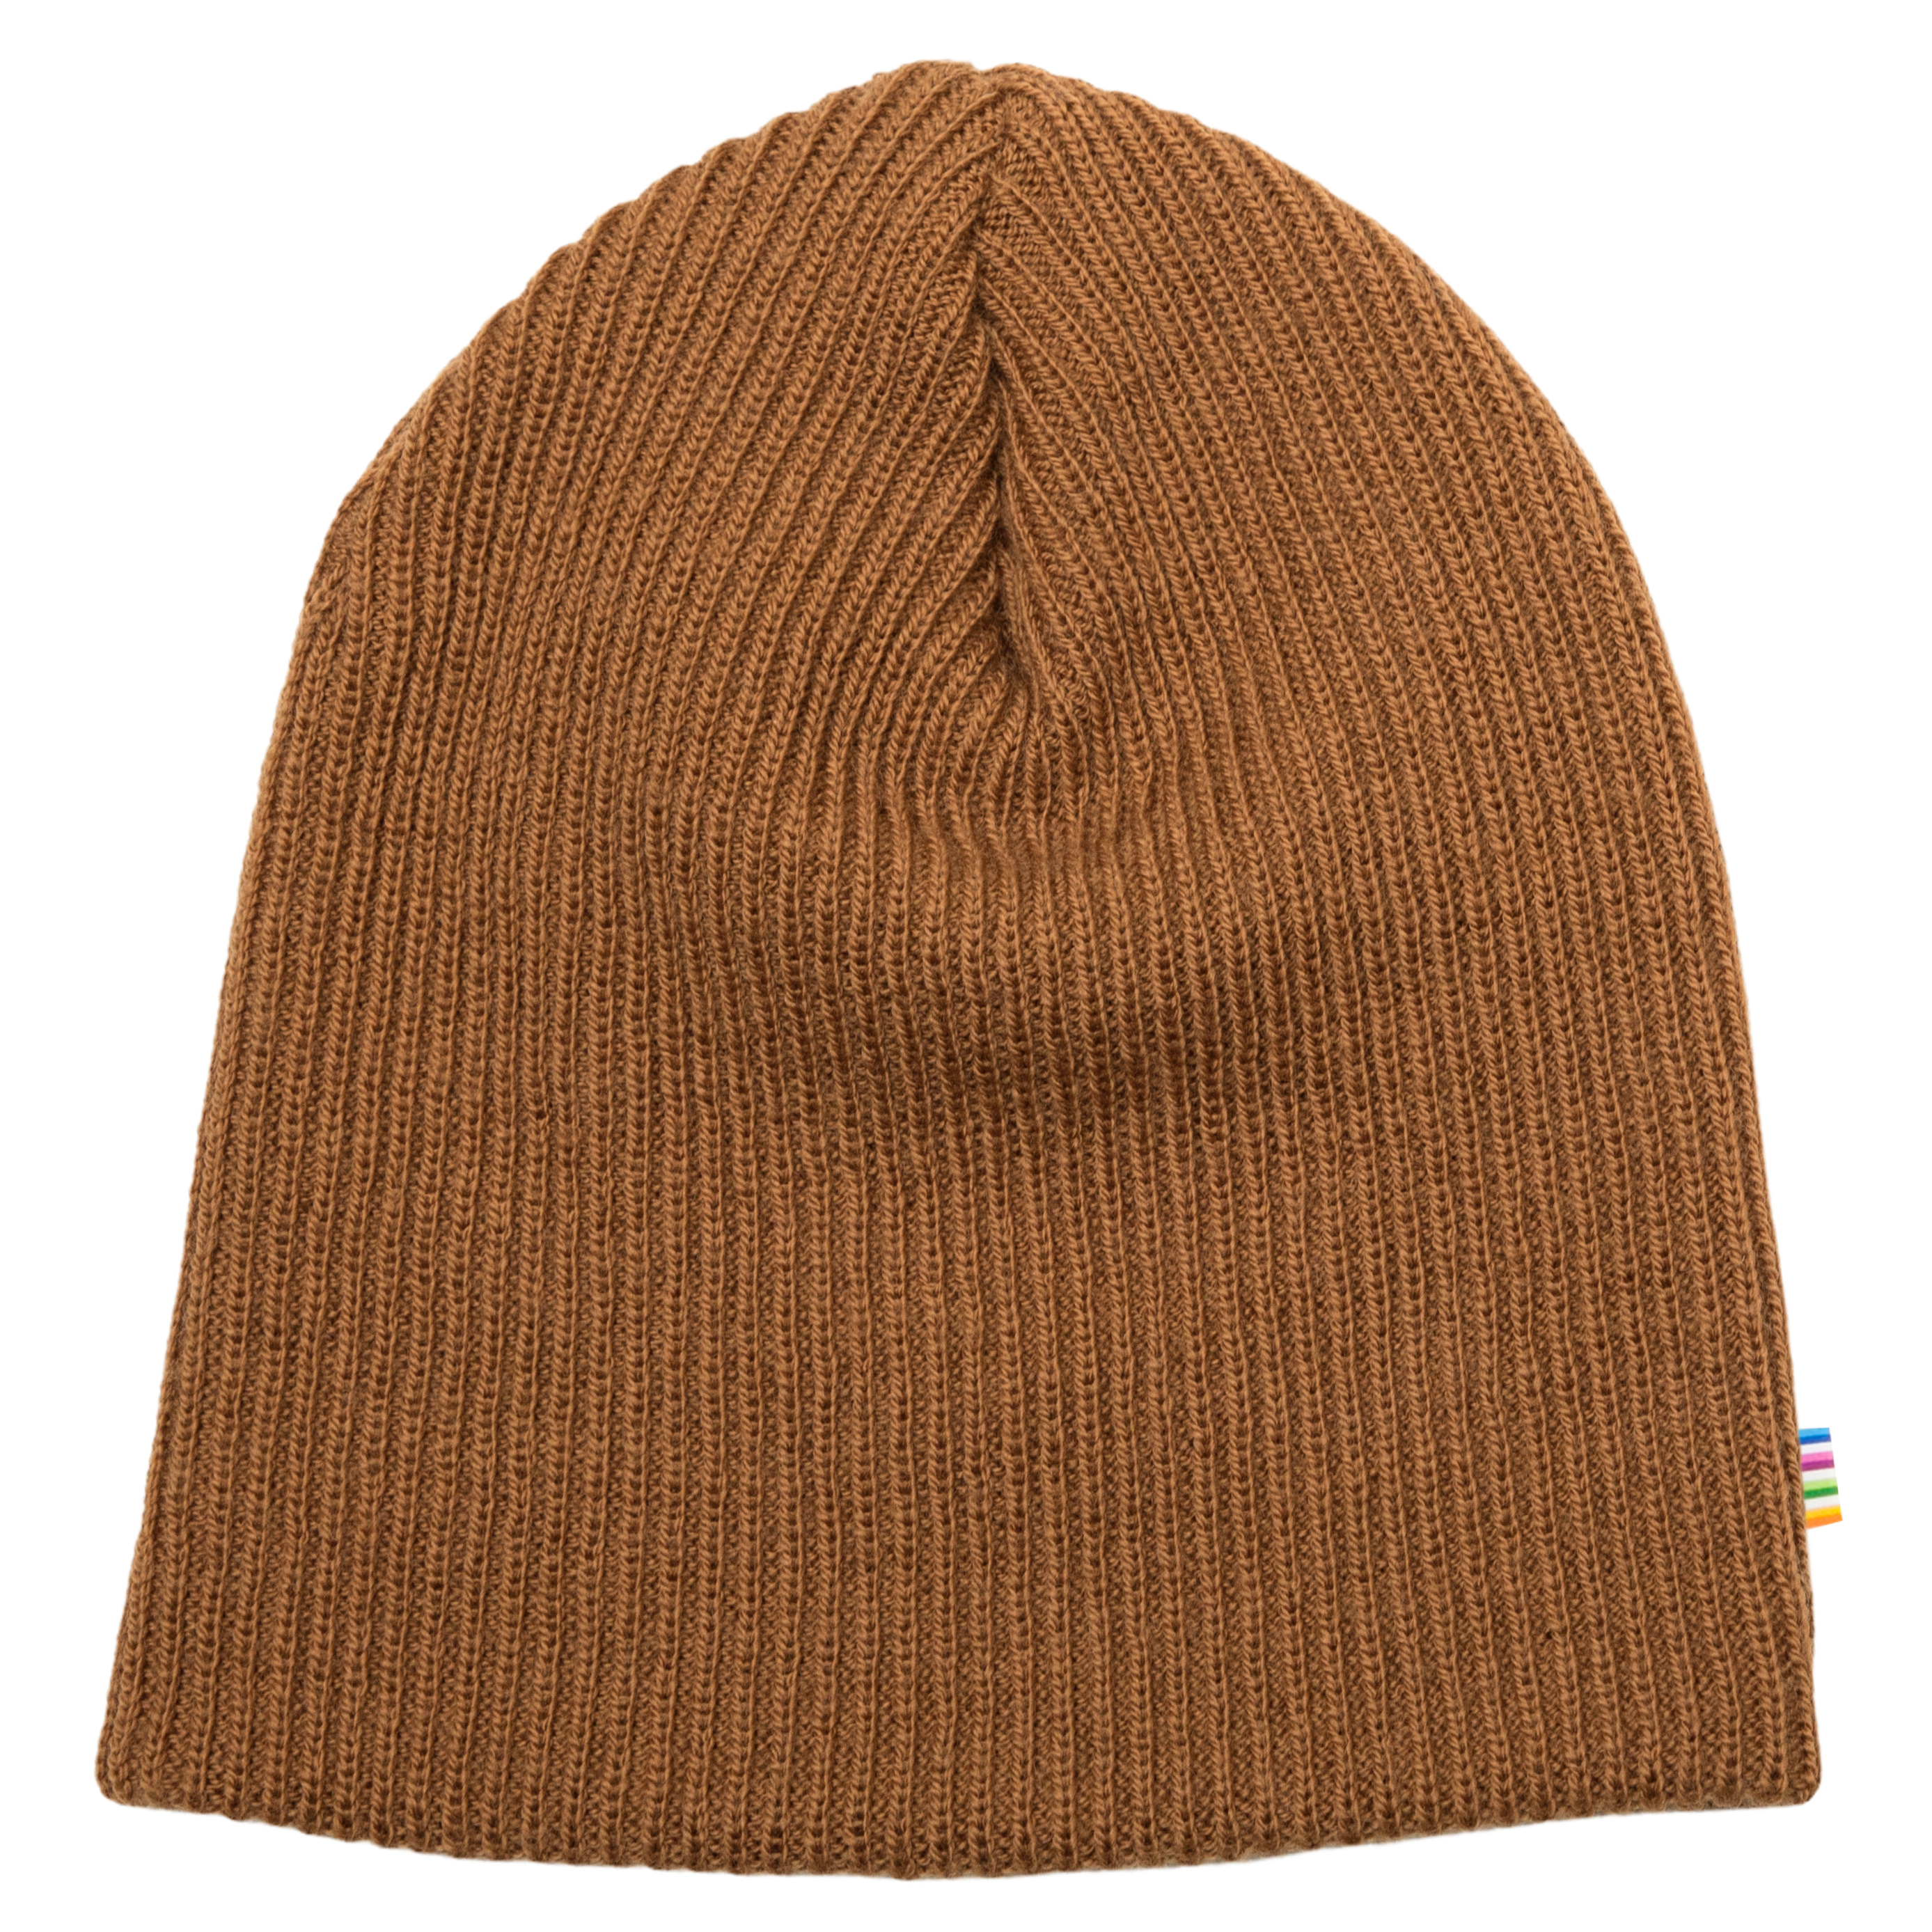 Hat, Dark Copper, 48 cm